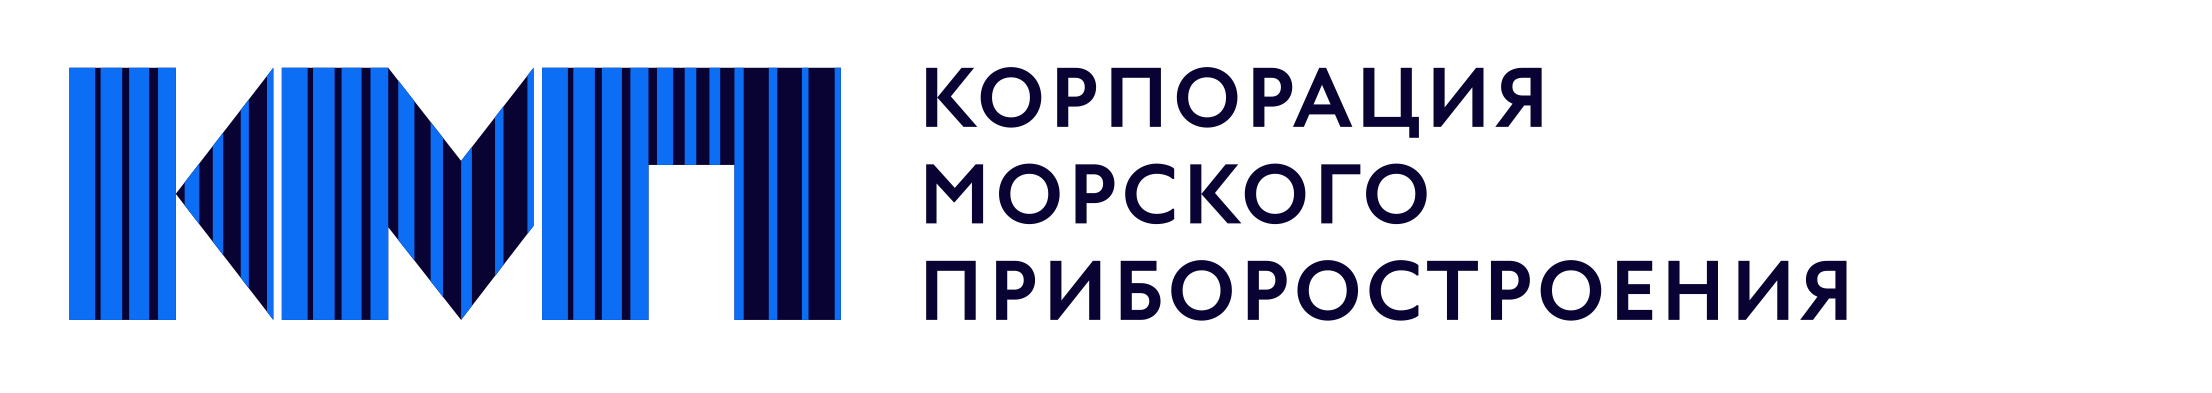 АО КМП_лого.jpeg